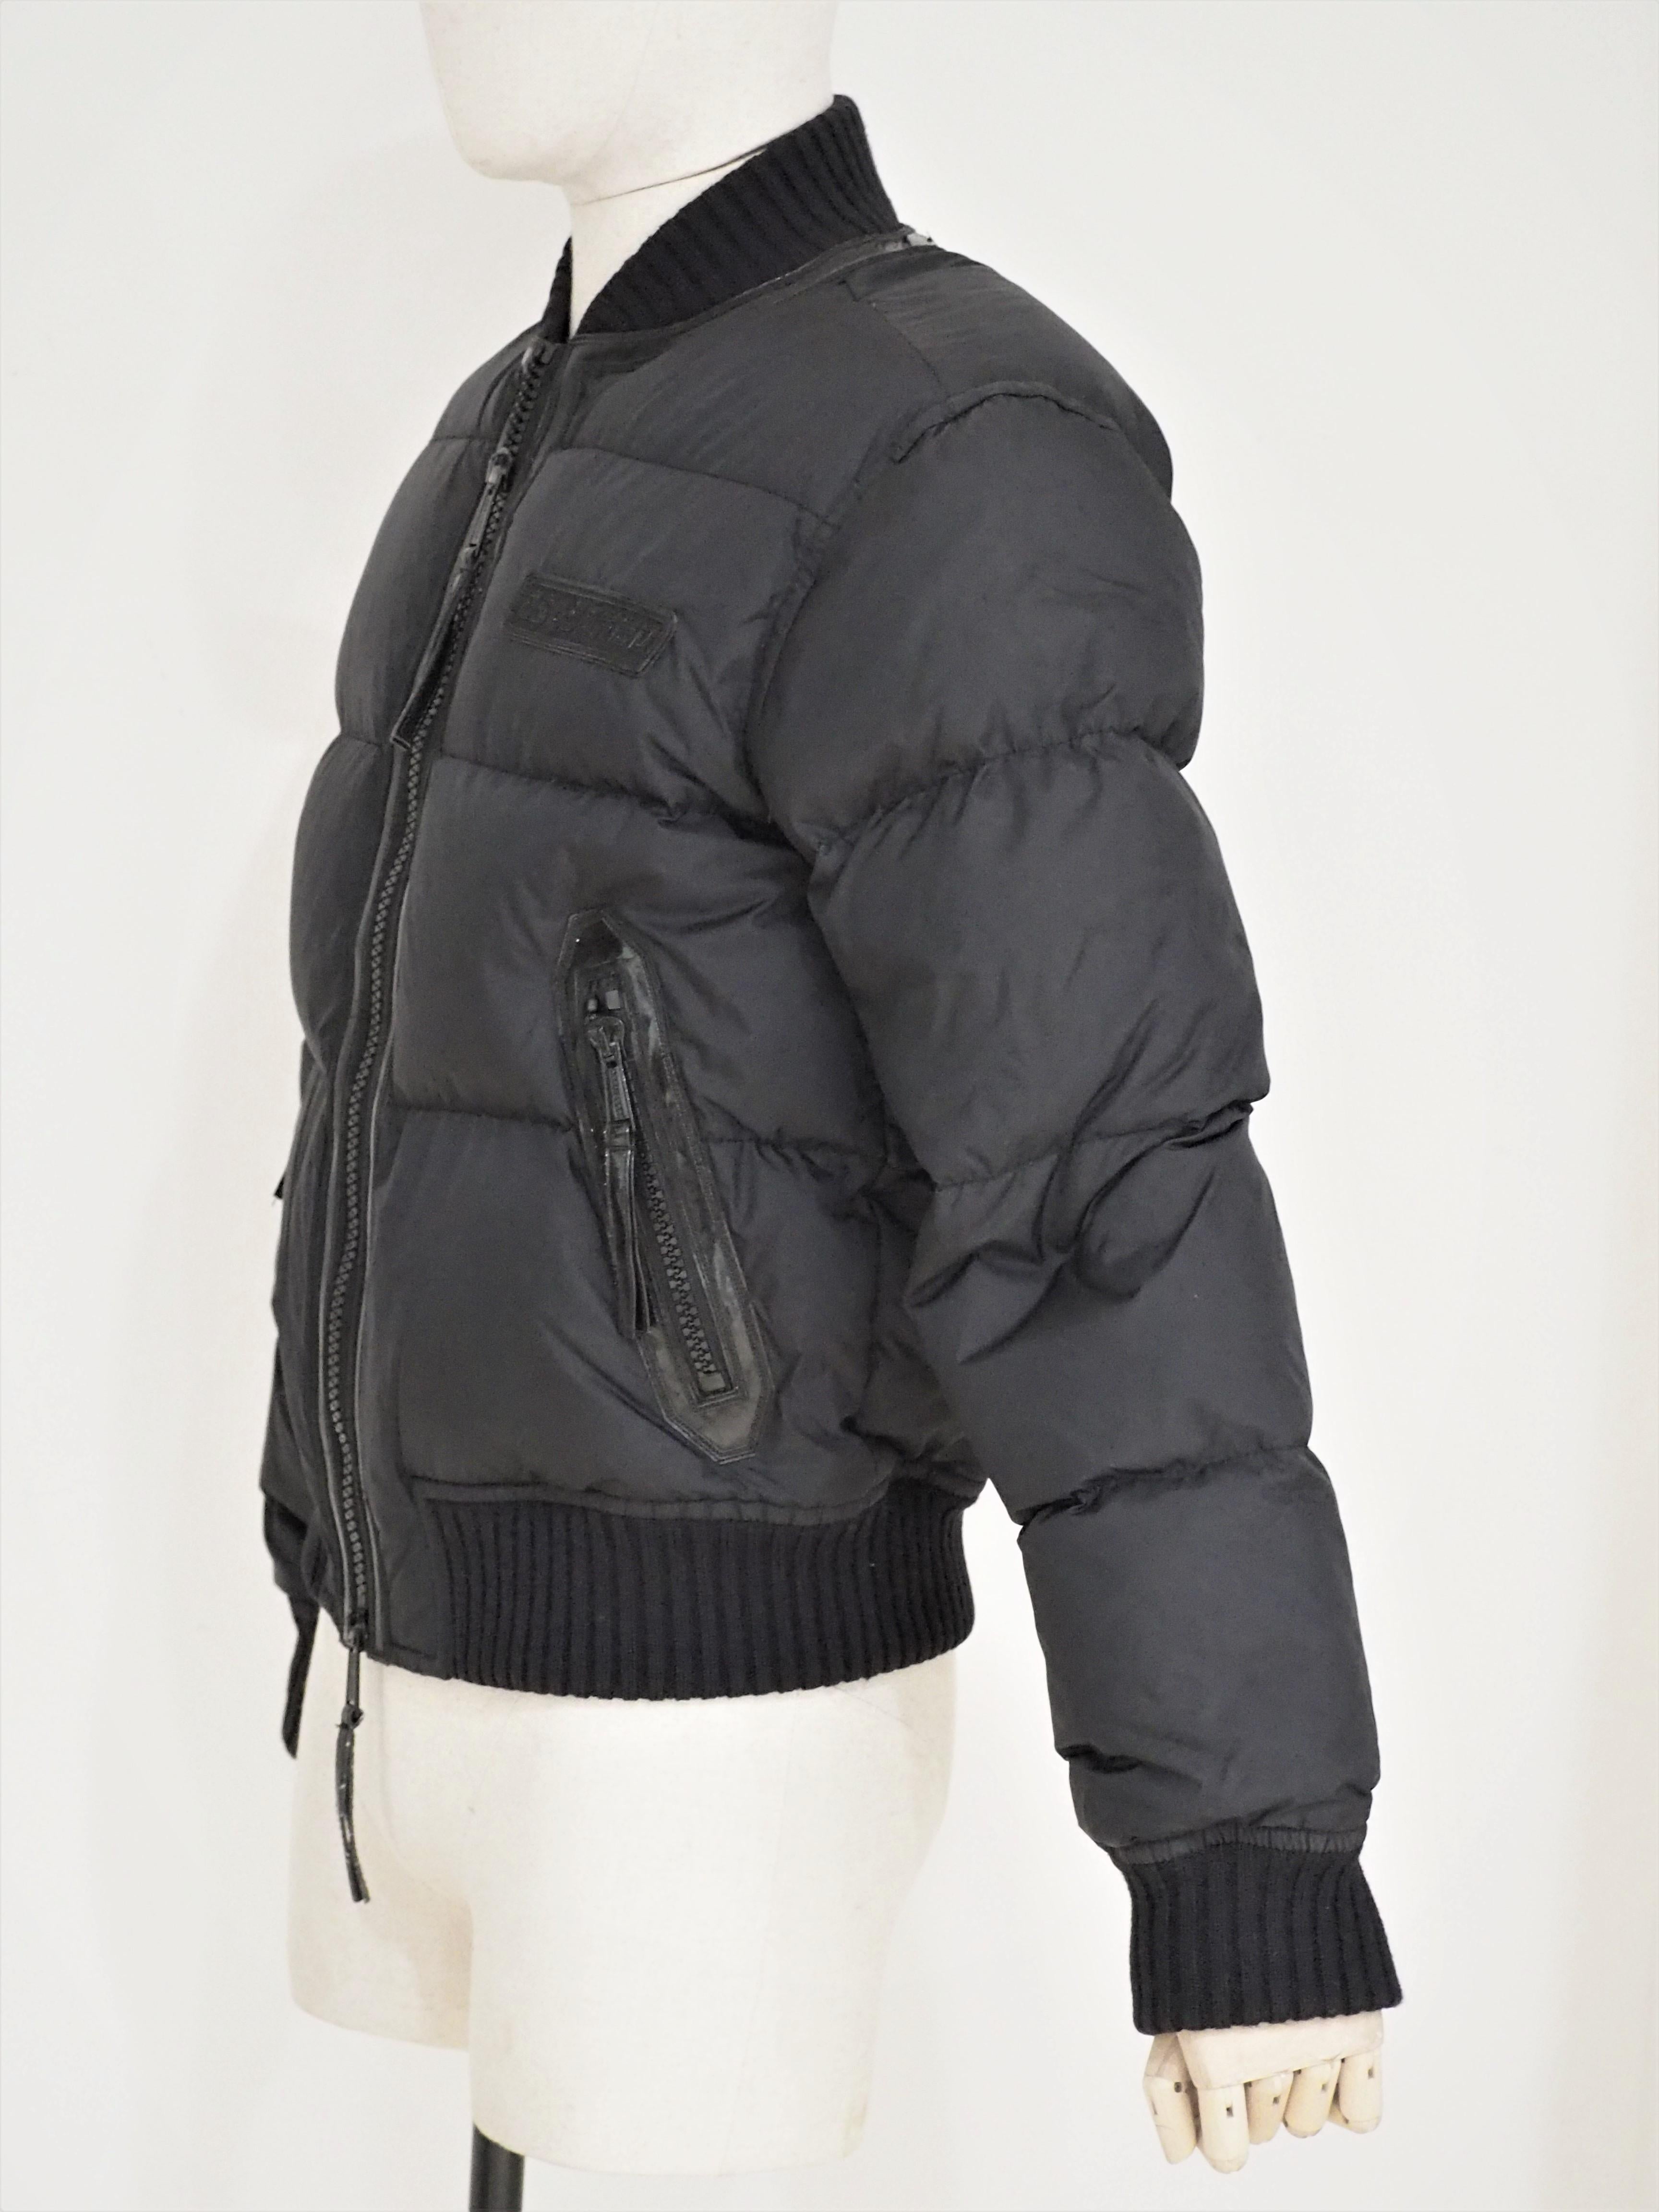 Dsquared2 black leather wool bomber jacket
Size M 